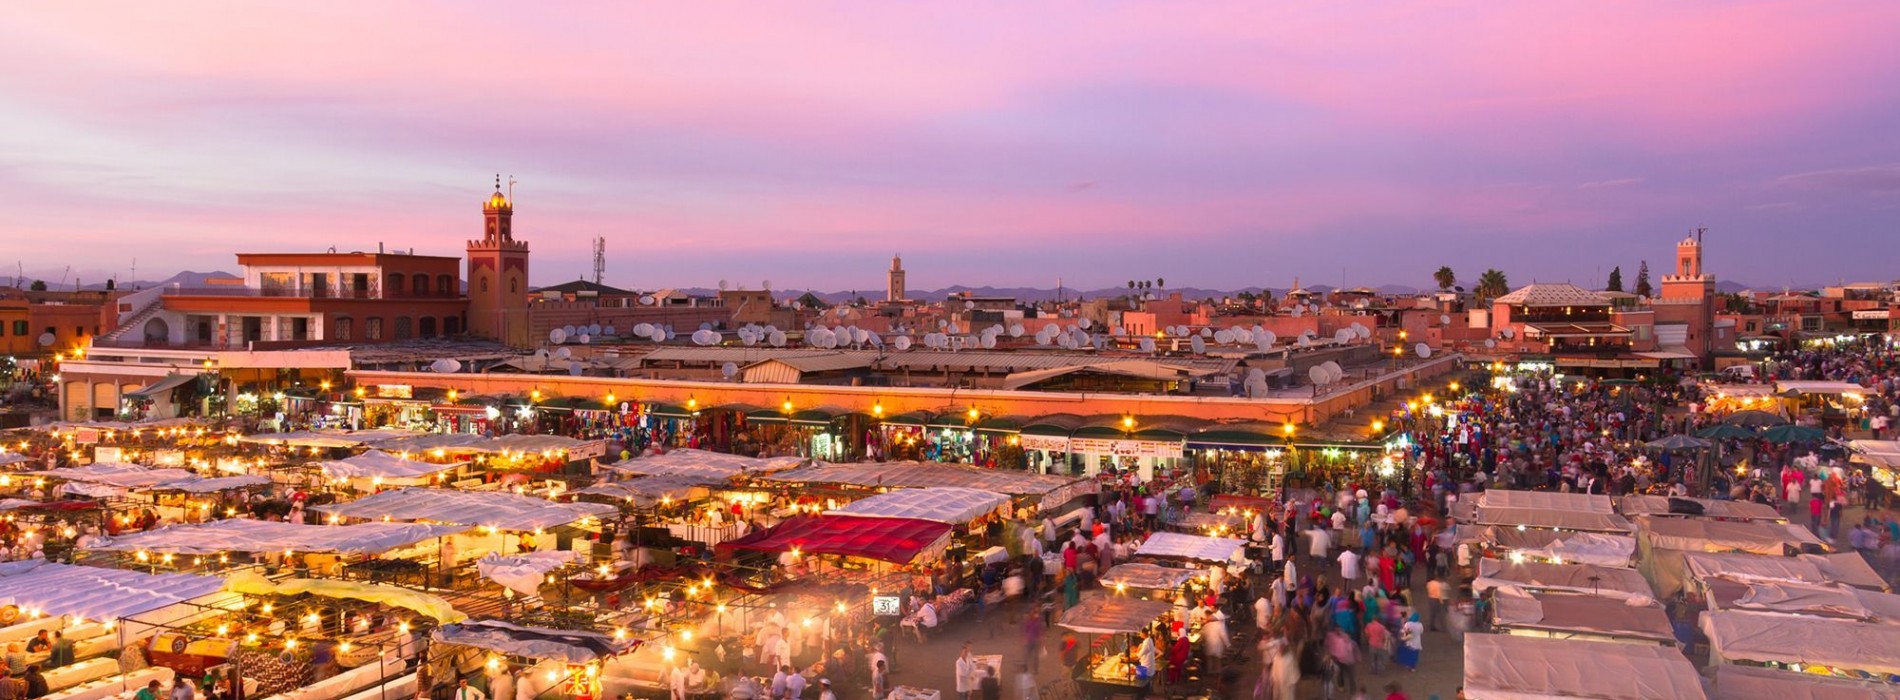 Jma El Fnaa Market Marrakech